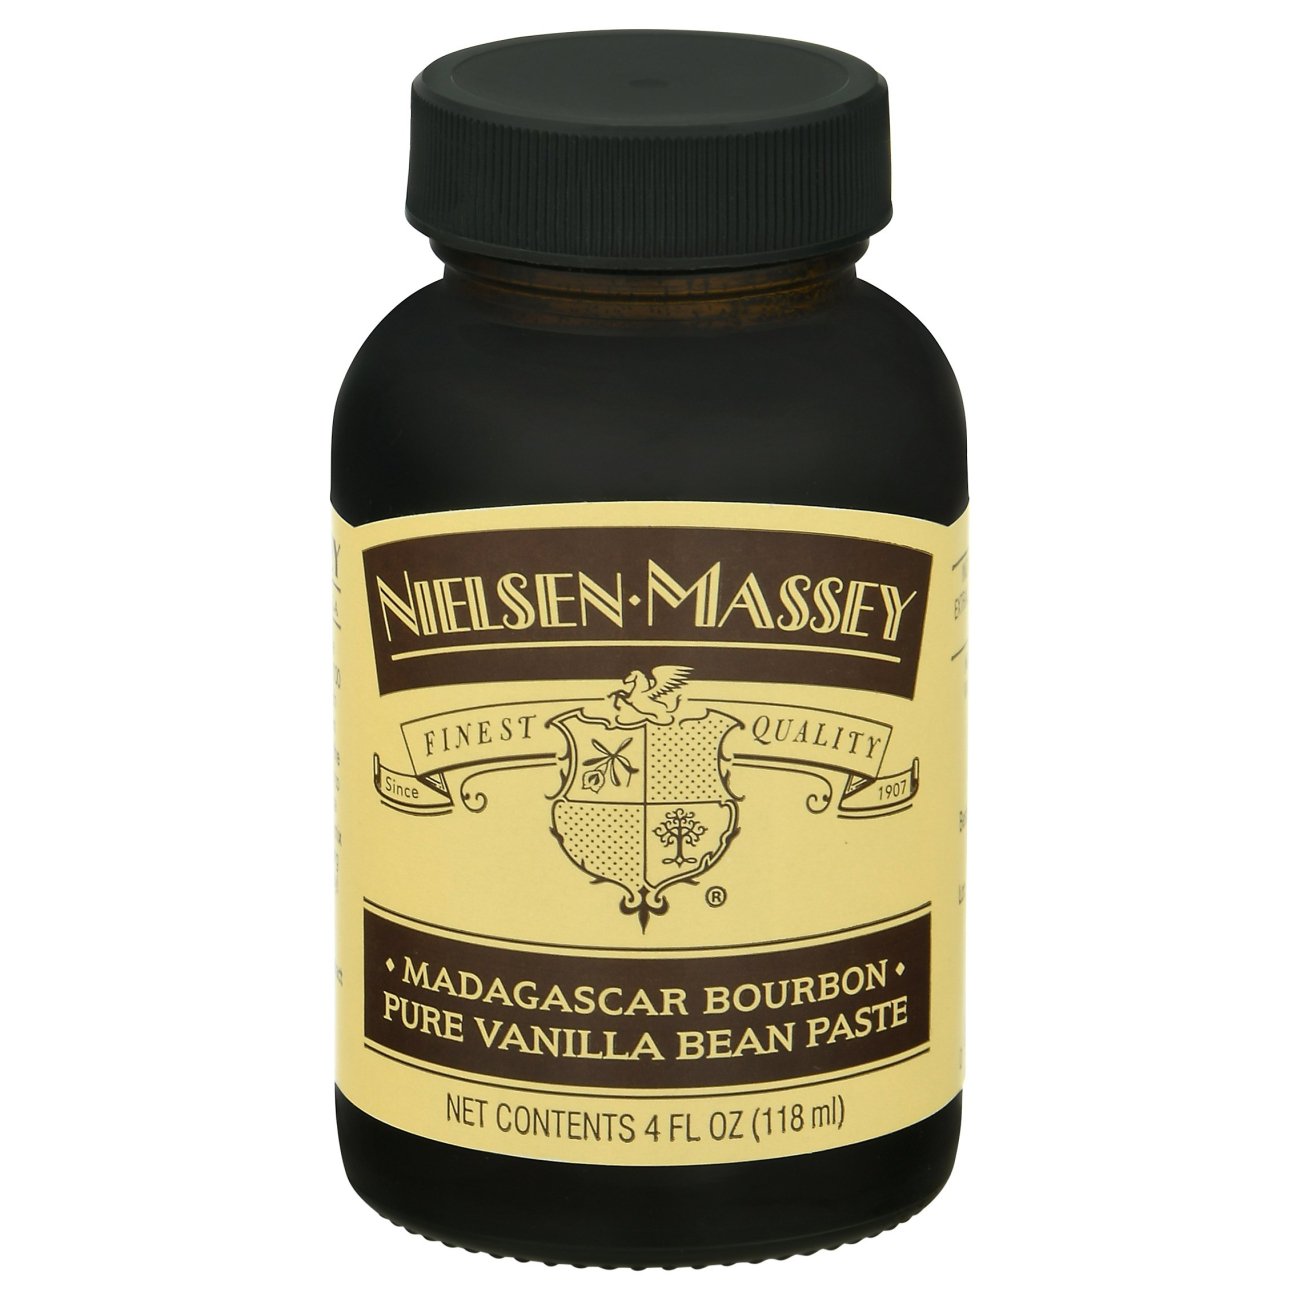 Nielsen Massey Madagascar Bourbon Pure Vanilla Bean Paste Shop Herbs And Spices At H E B